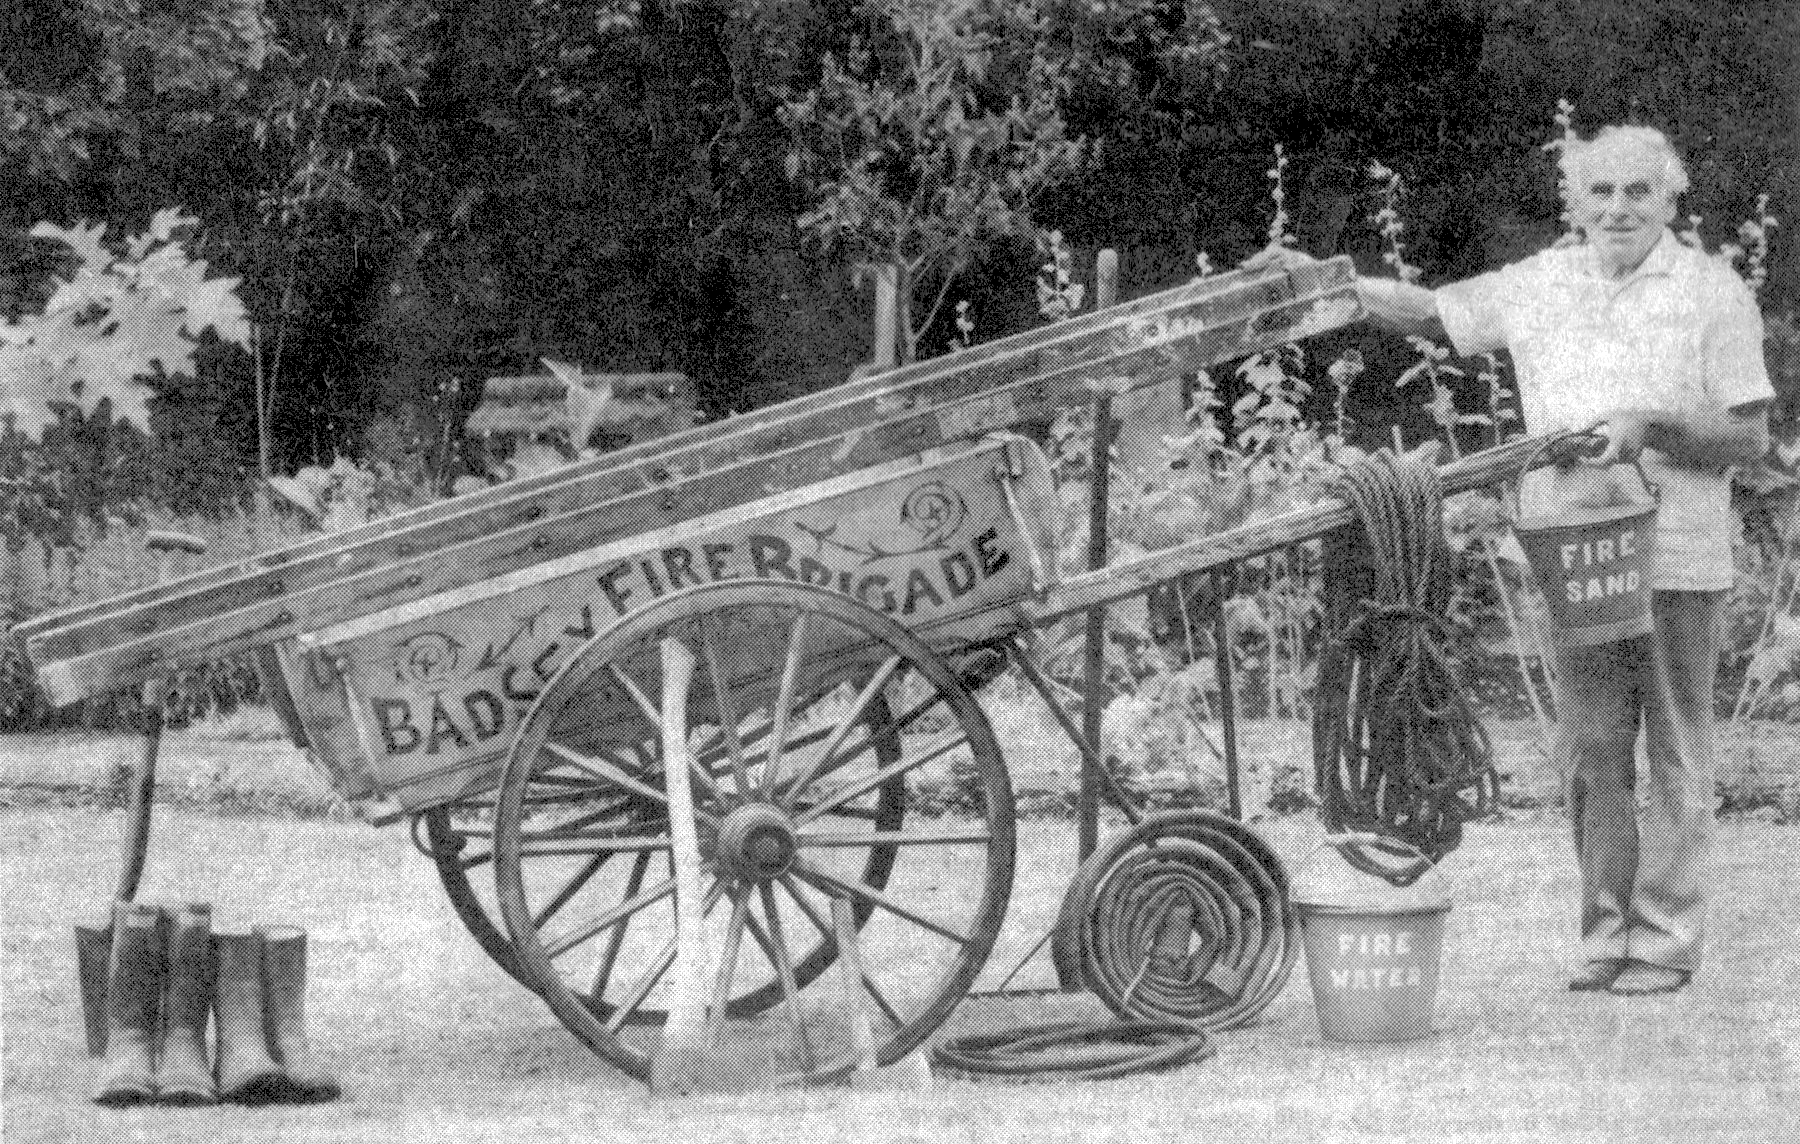 Fire Brigade cart